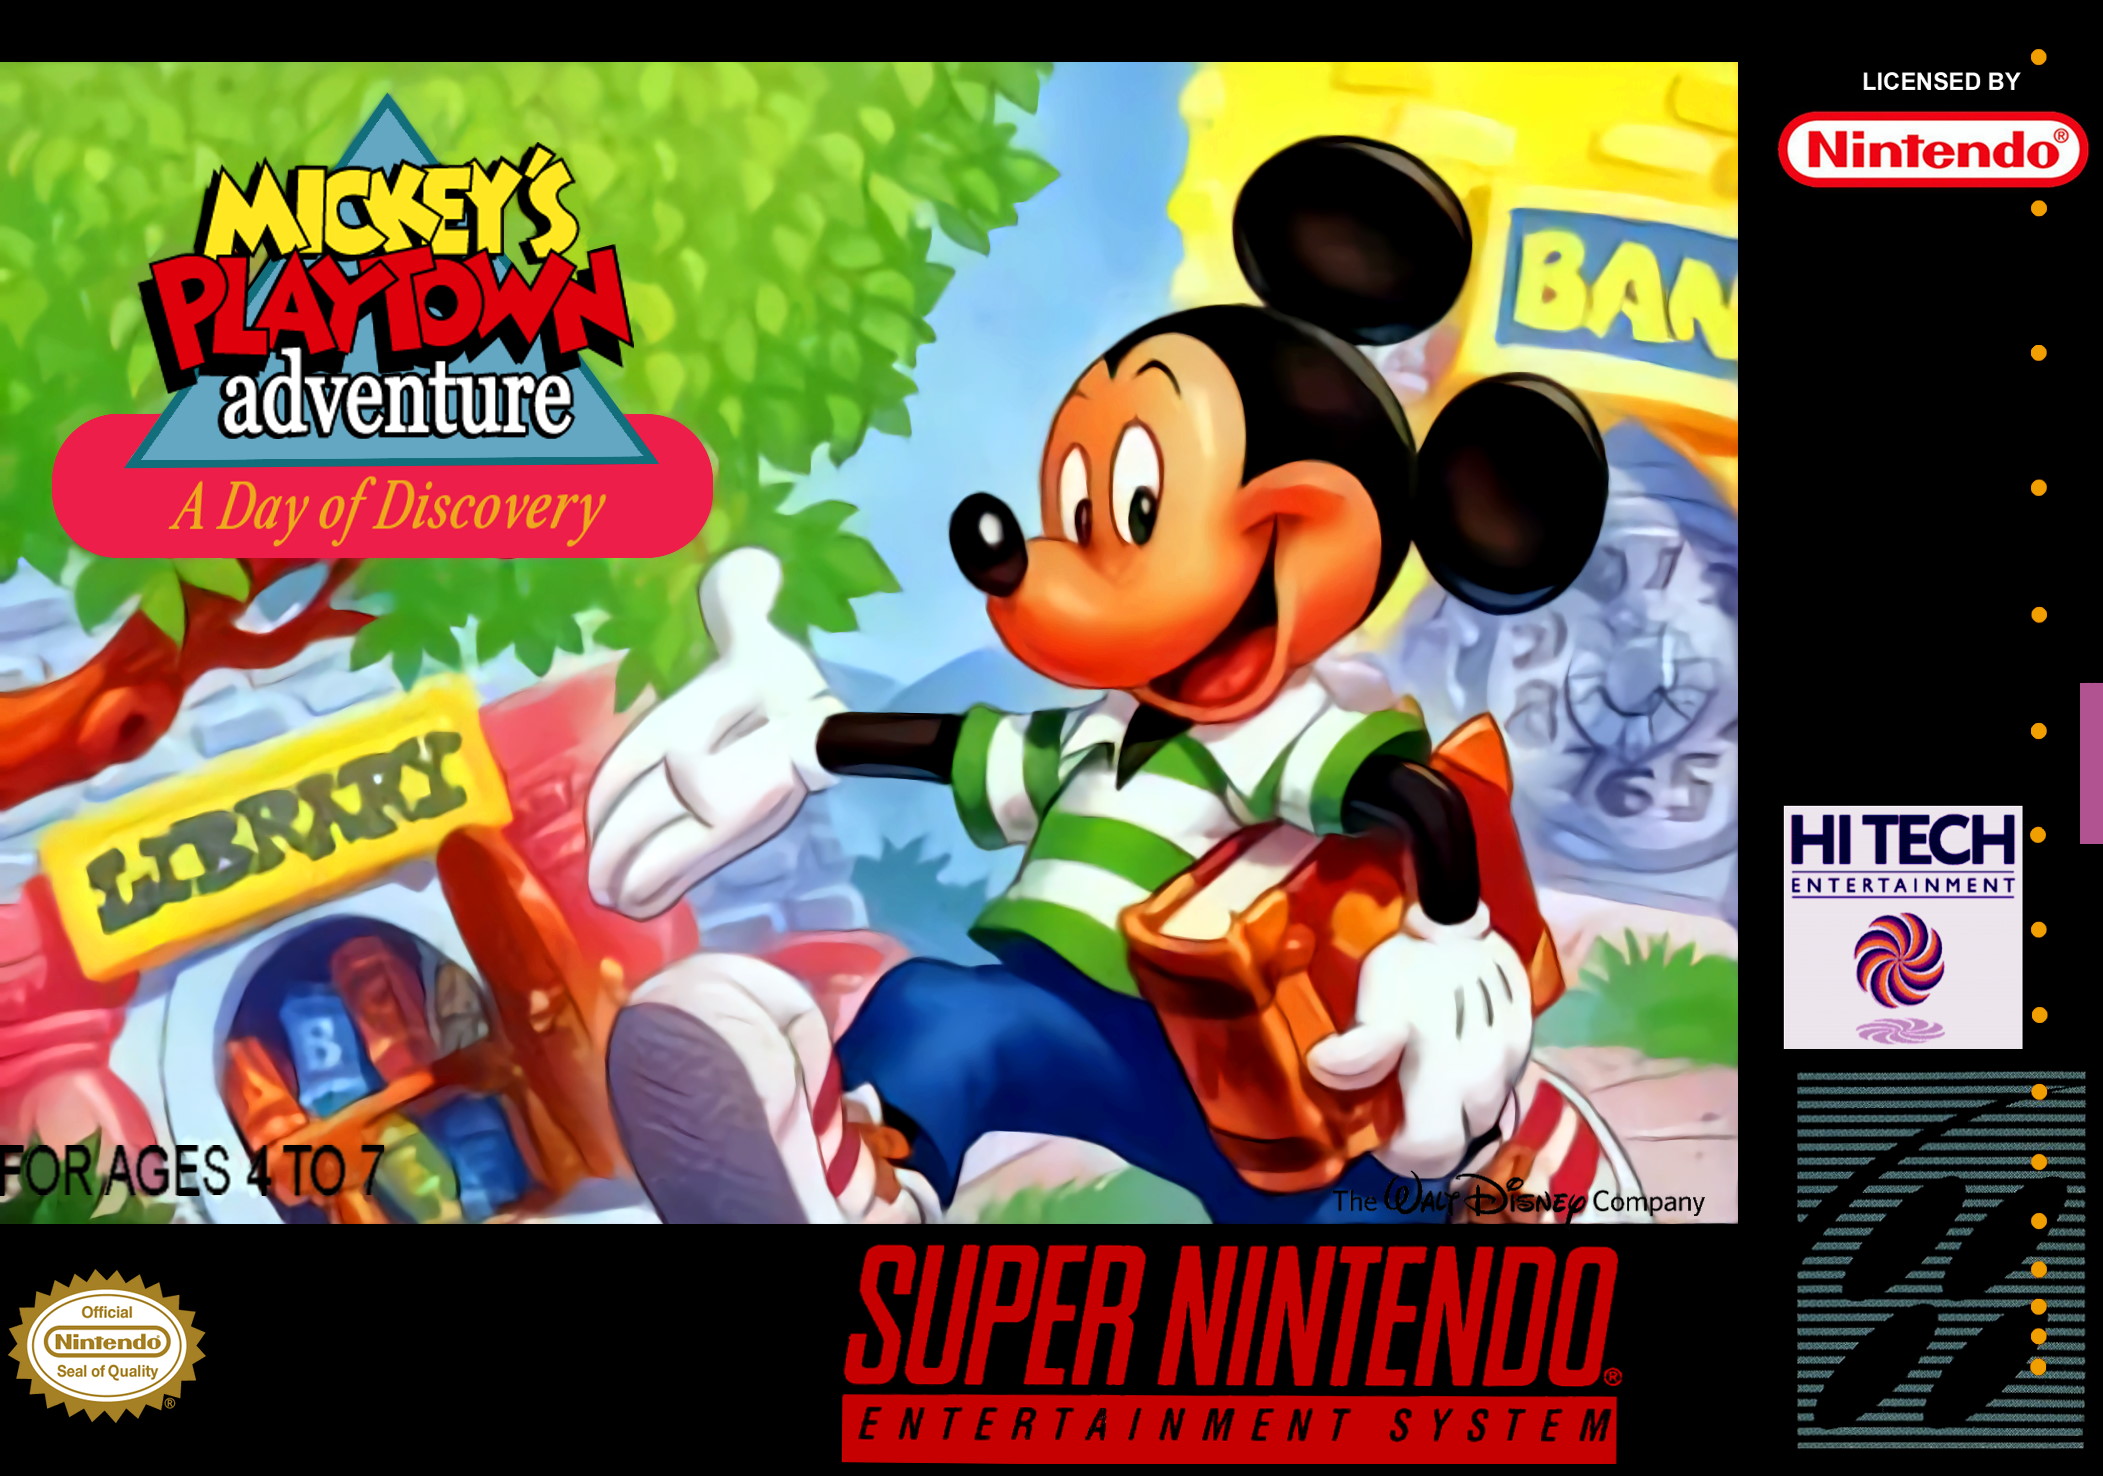 Mickey s adventures. Mickey's Playtown Adventure - a Day of Discovery!. Мики Маус супер Нинткндо. Mickey's Playtown Adventure - a Day of Discovery! Snes. Микки Маус супер Нинтендо игра.